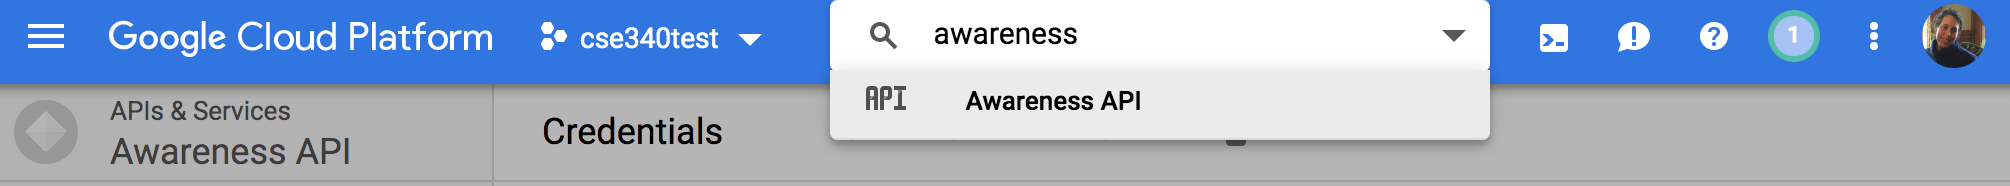 Screenshot of awareness search